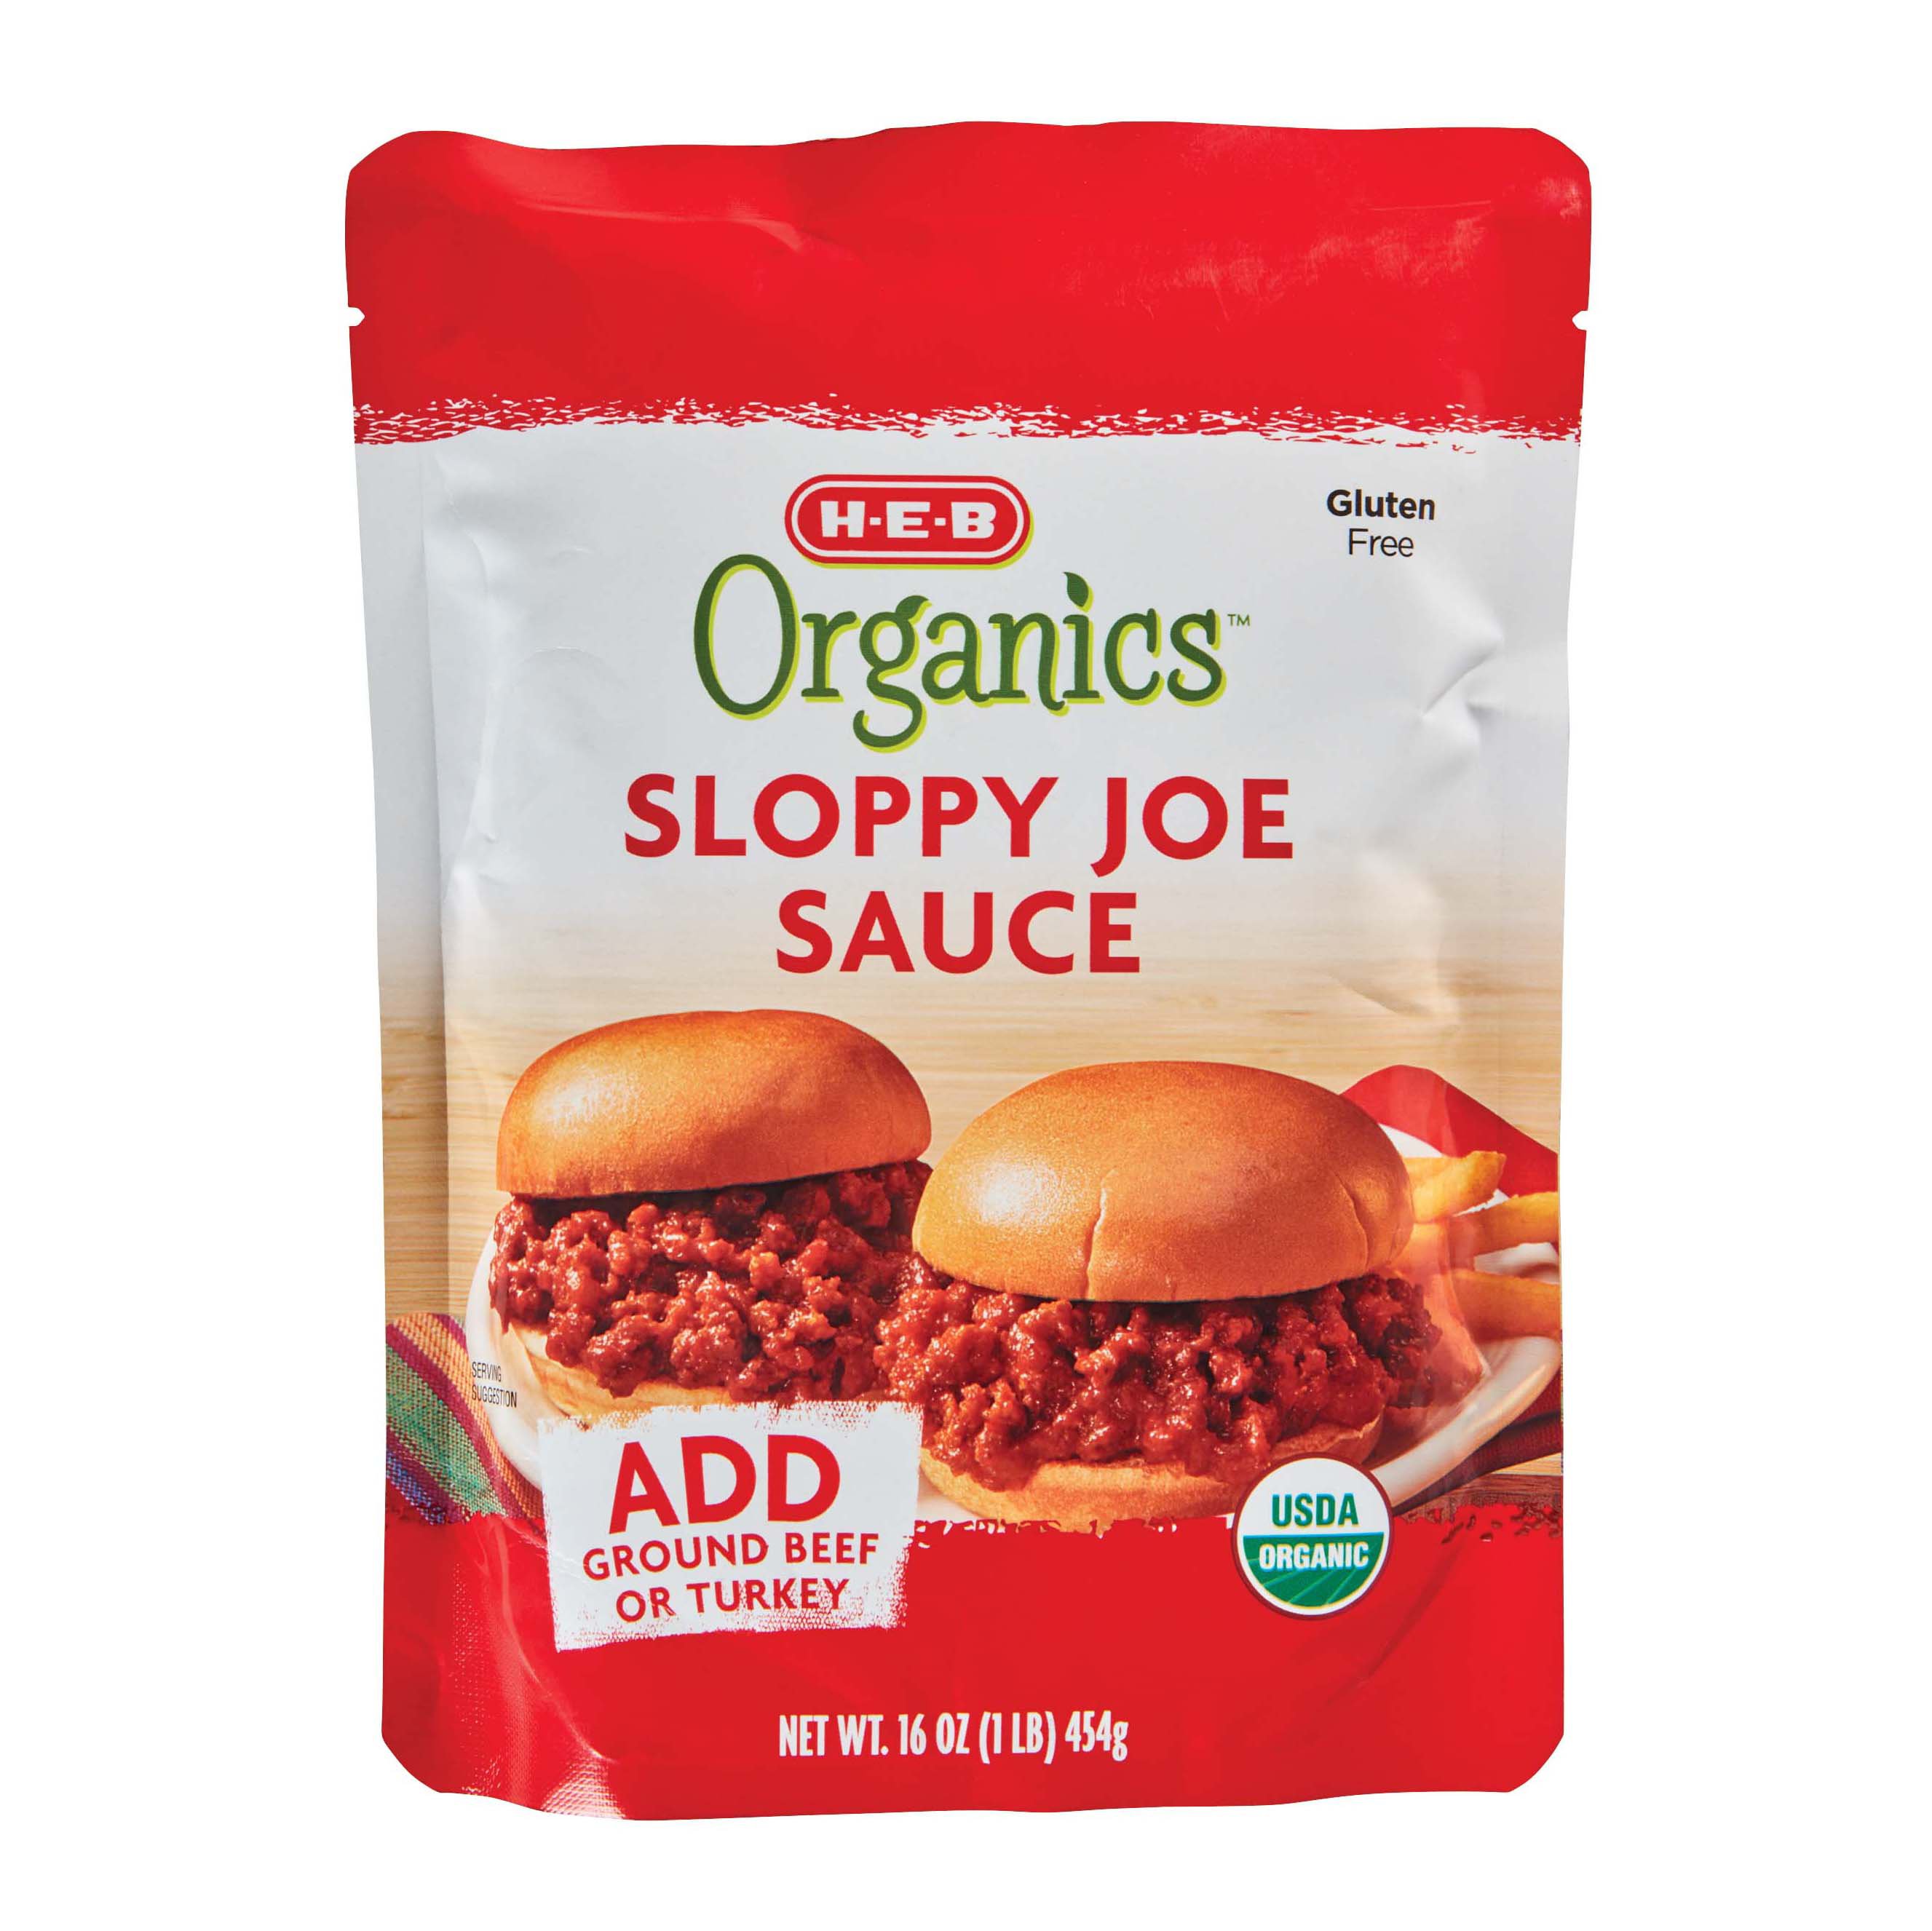 H-E-B Organics Sloppy Joe Sauce